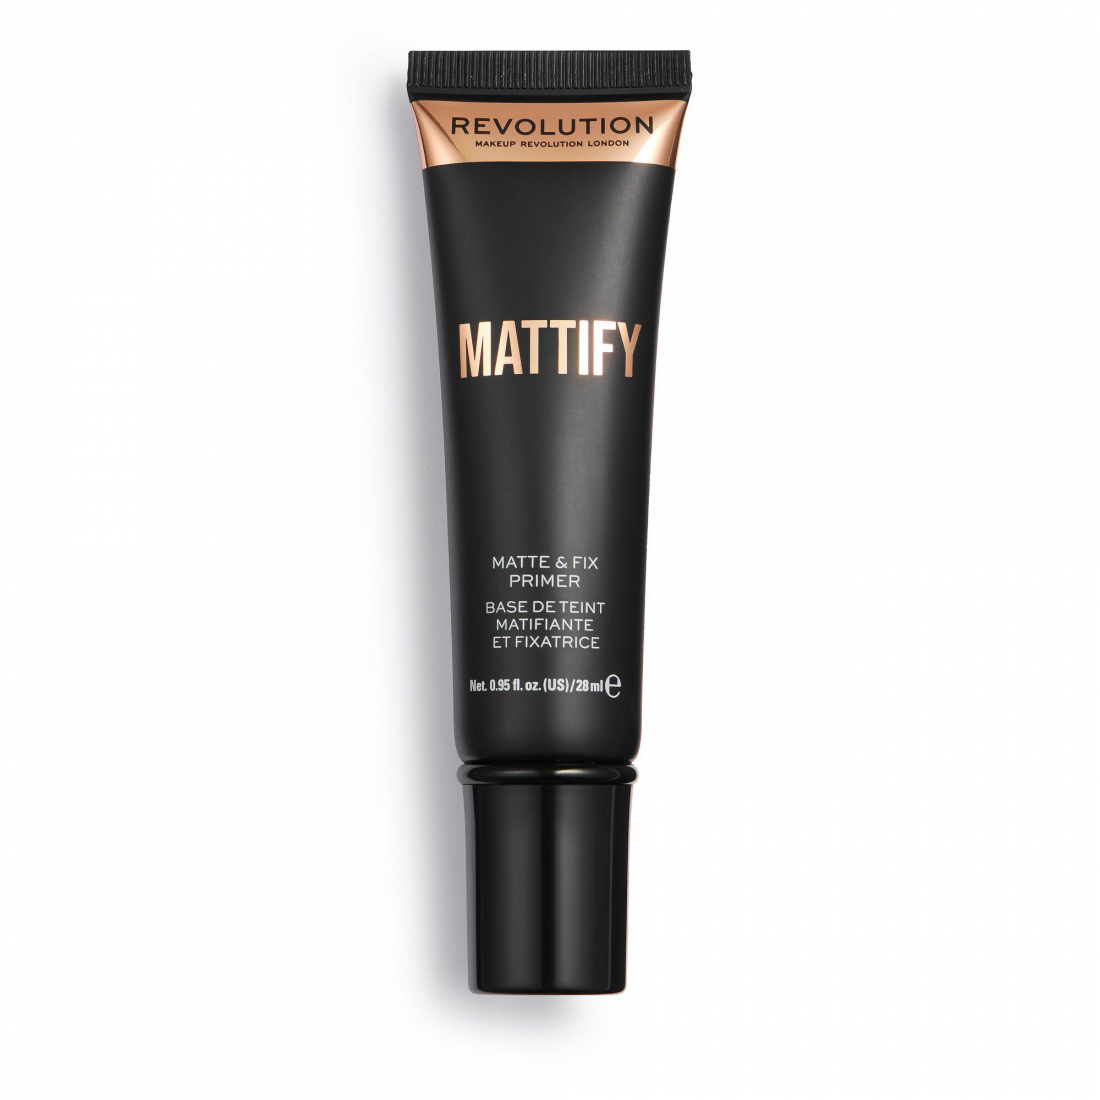 'Mattify Matte & Fix' Primer - 28 ml